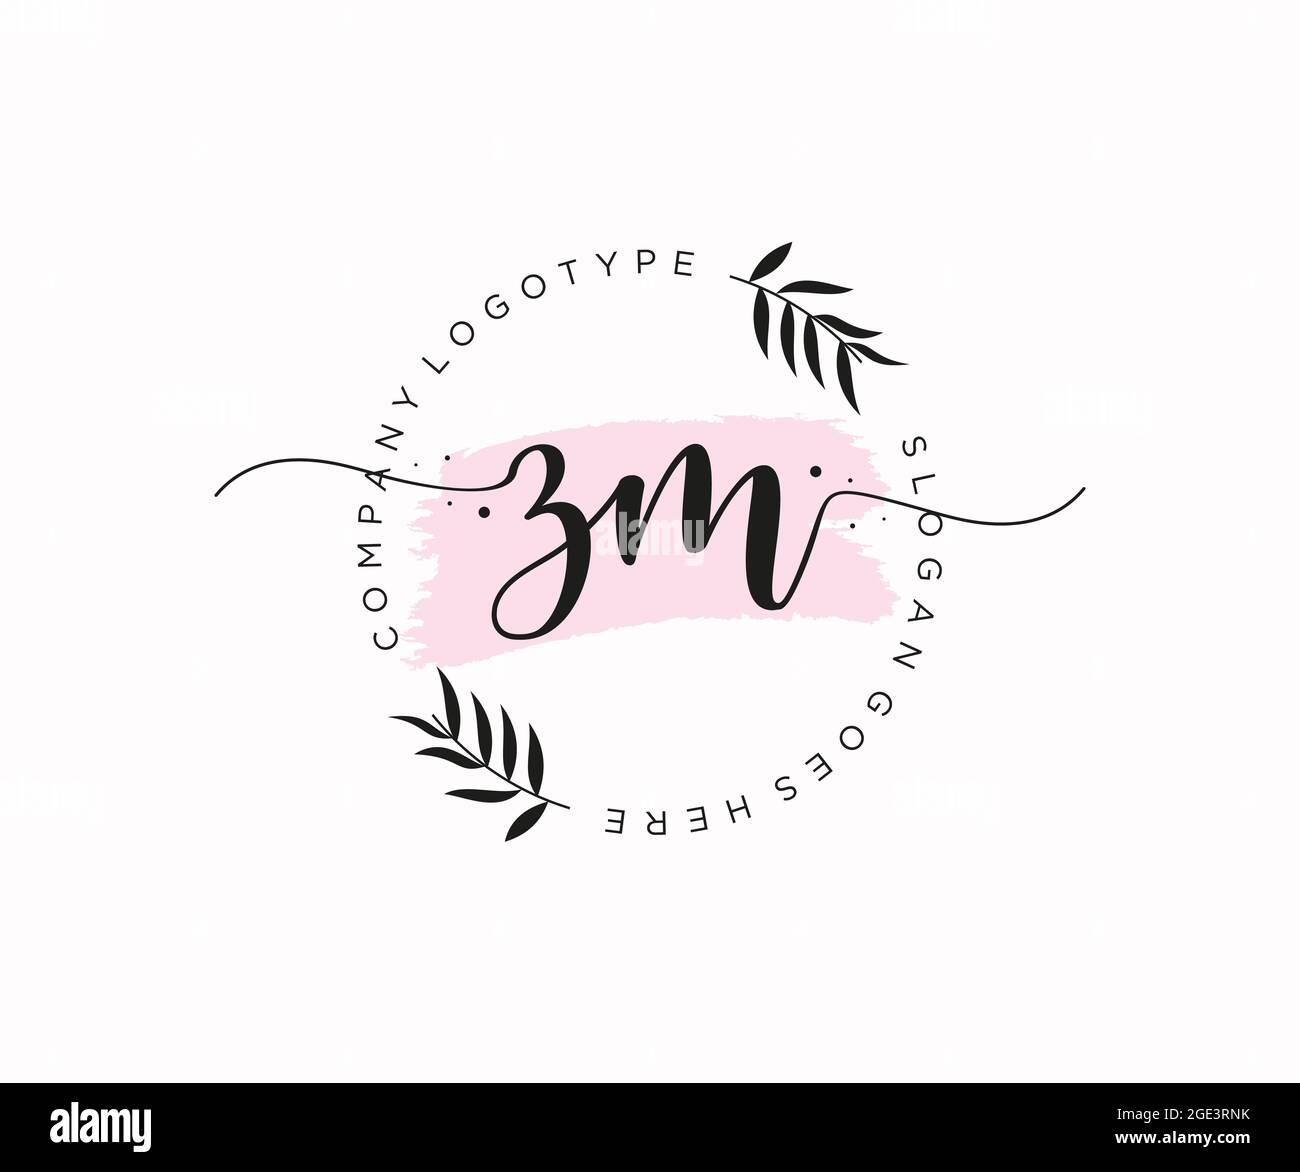 ZM Feminine logo beauty monogram and elegant logo design, handwriting logo of initial signature, wedding, fashion, floral and botanical with creative Stock Vector